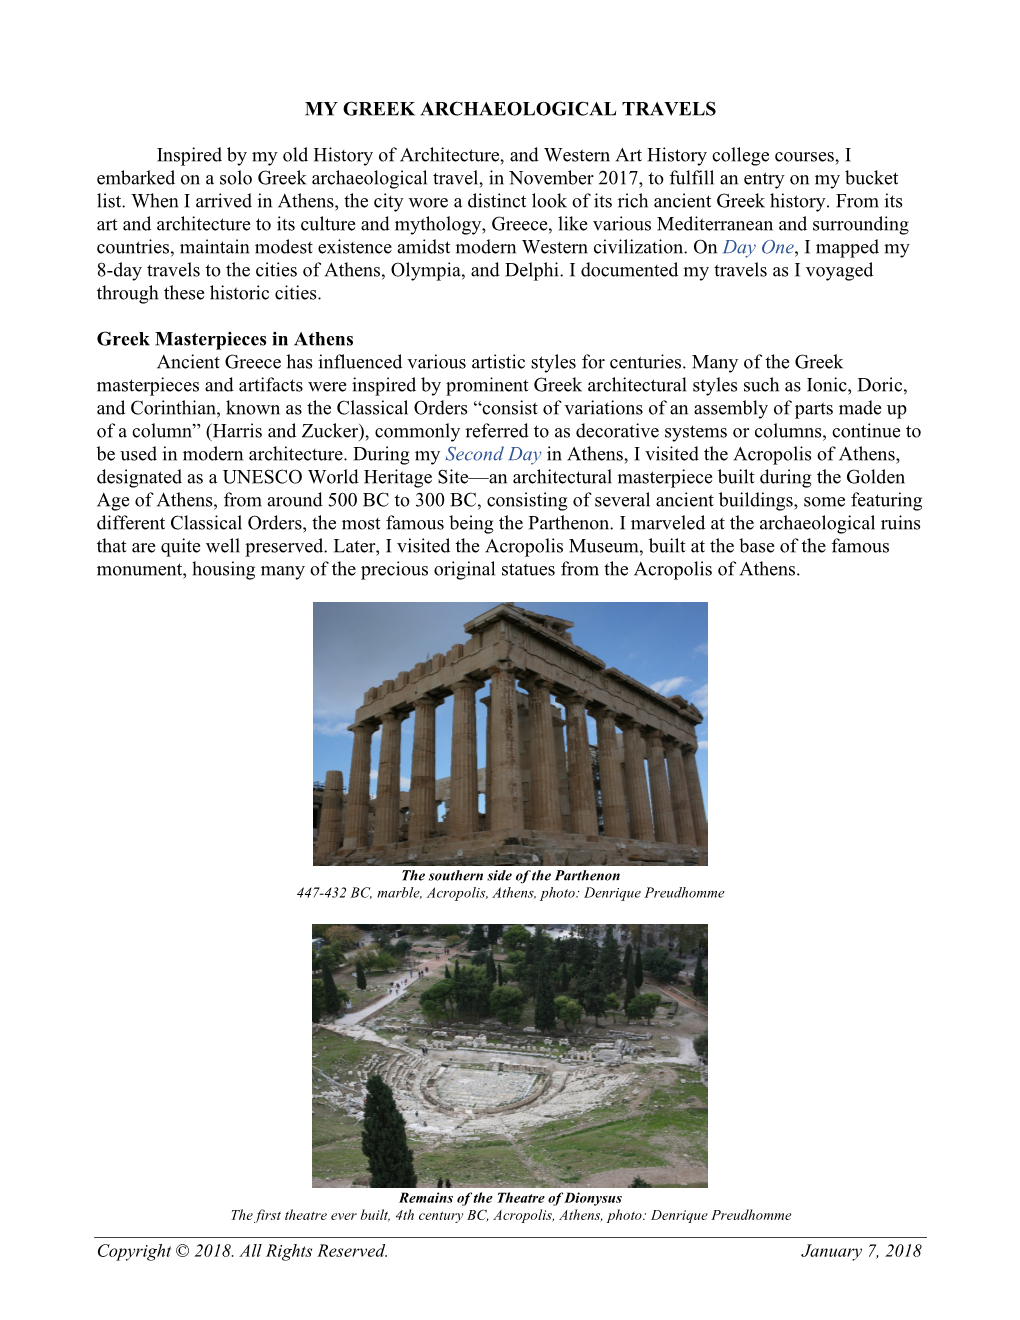 My Greek Archaeological Travels